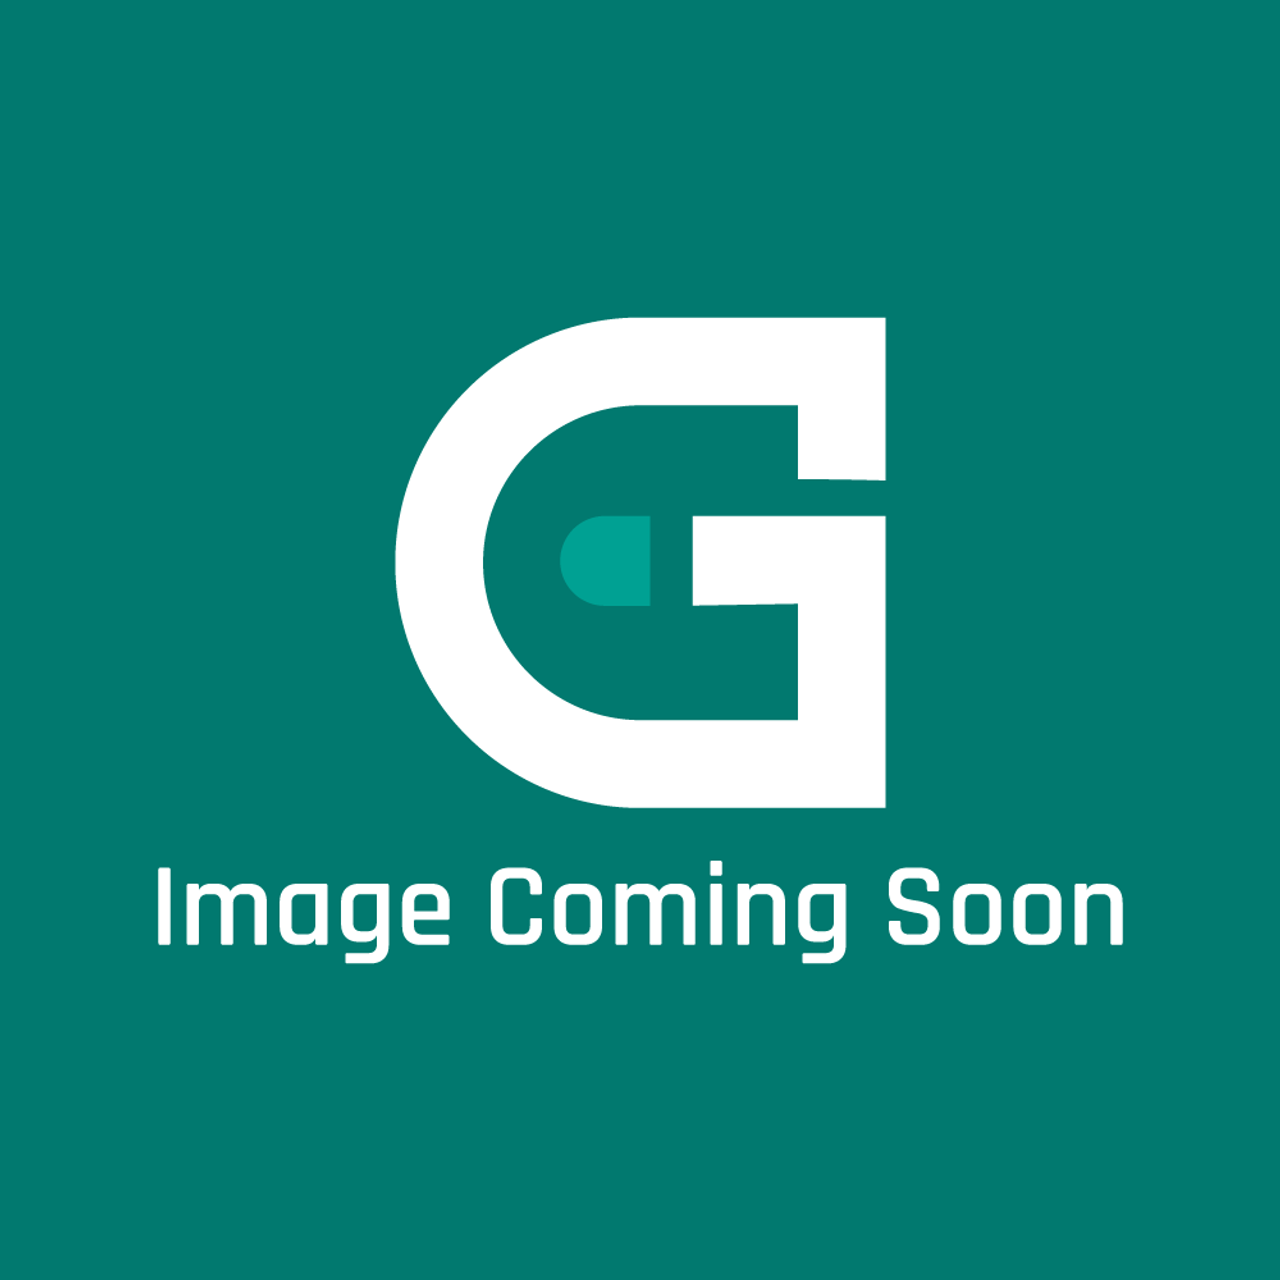 GE Appliances WC35X10003 - Custm Panl Installtn Kit - Image Coming Soon!